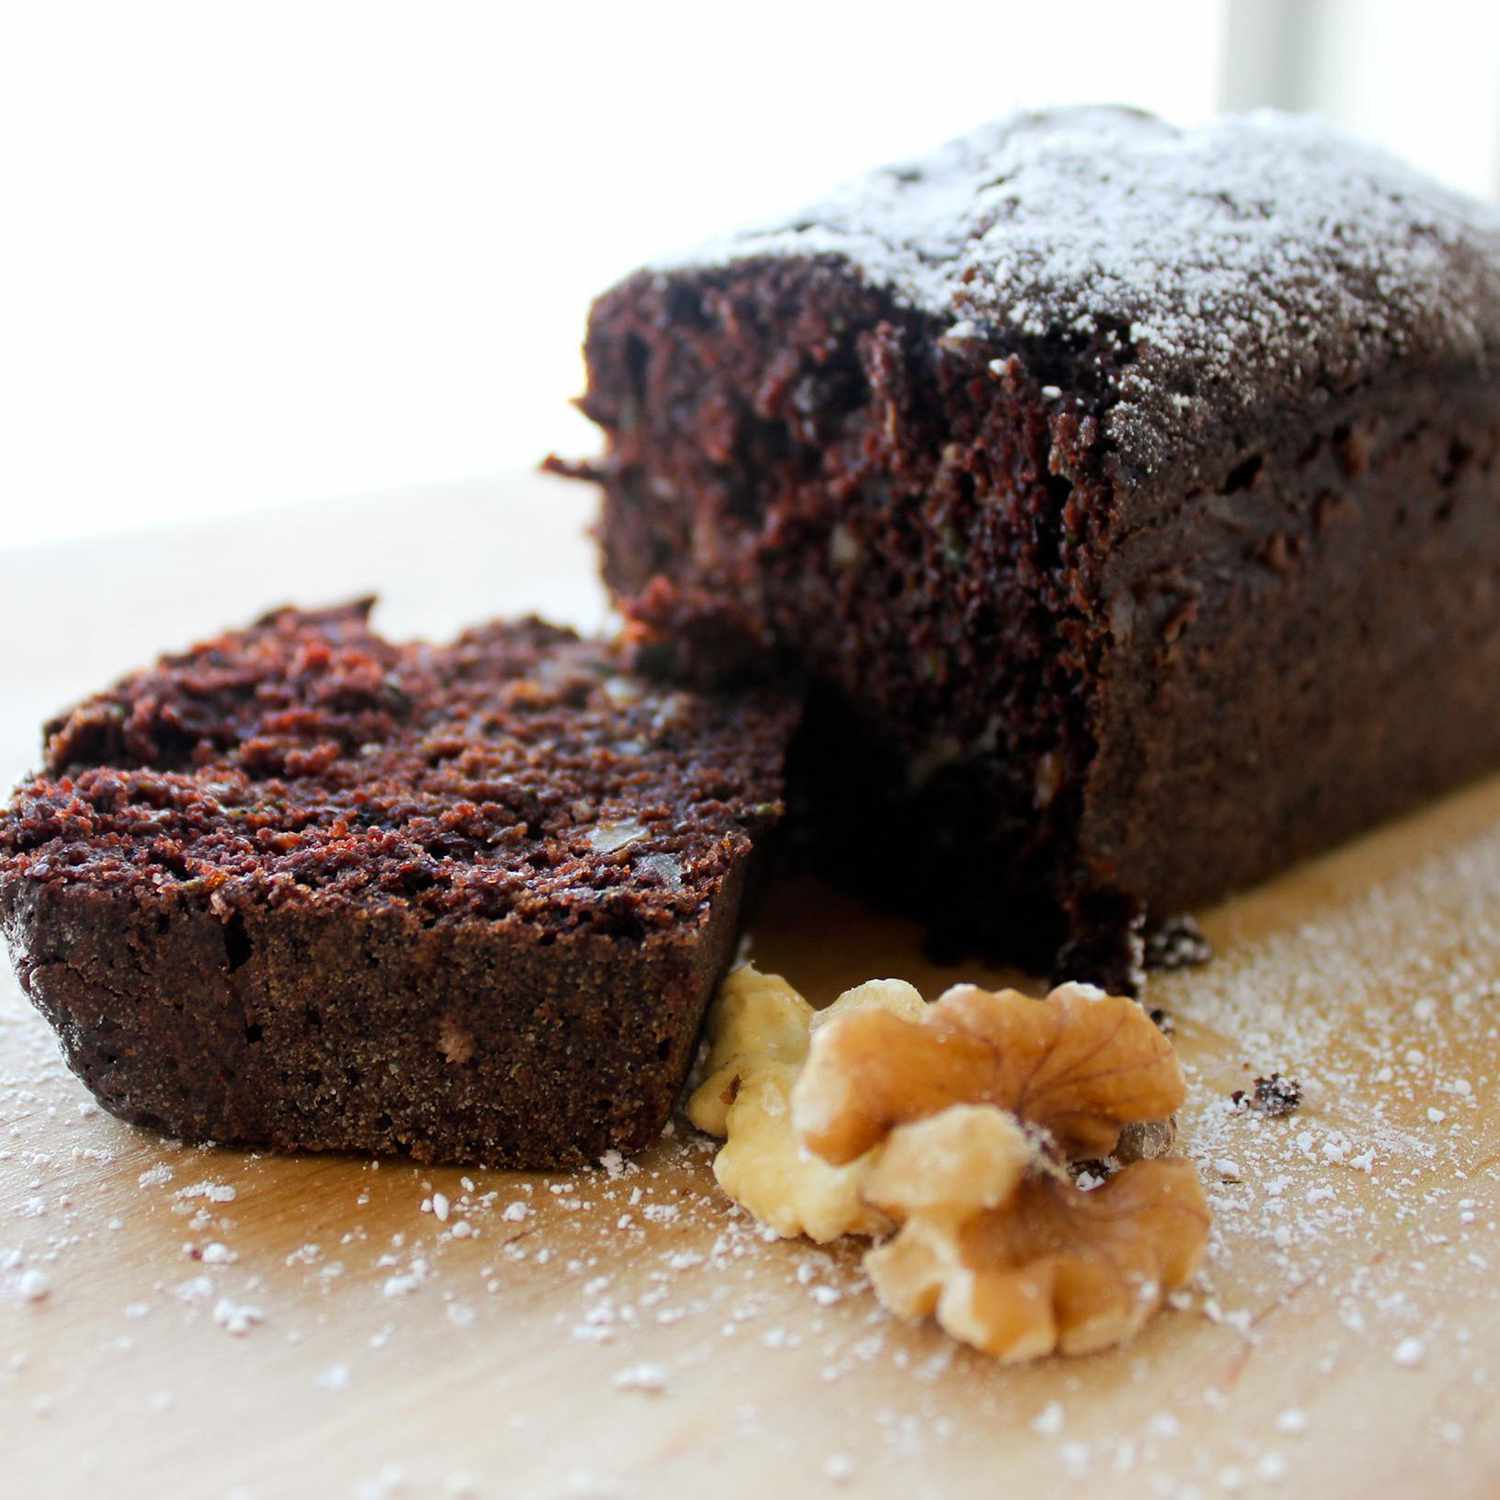 close up view of Chocolate Zucchini Cake garnished with powdered sugar, next to a walnut